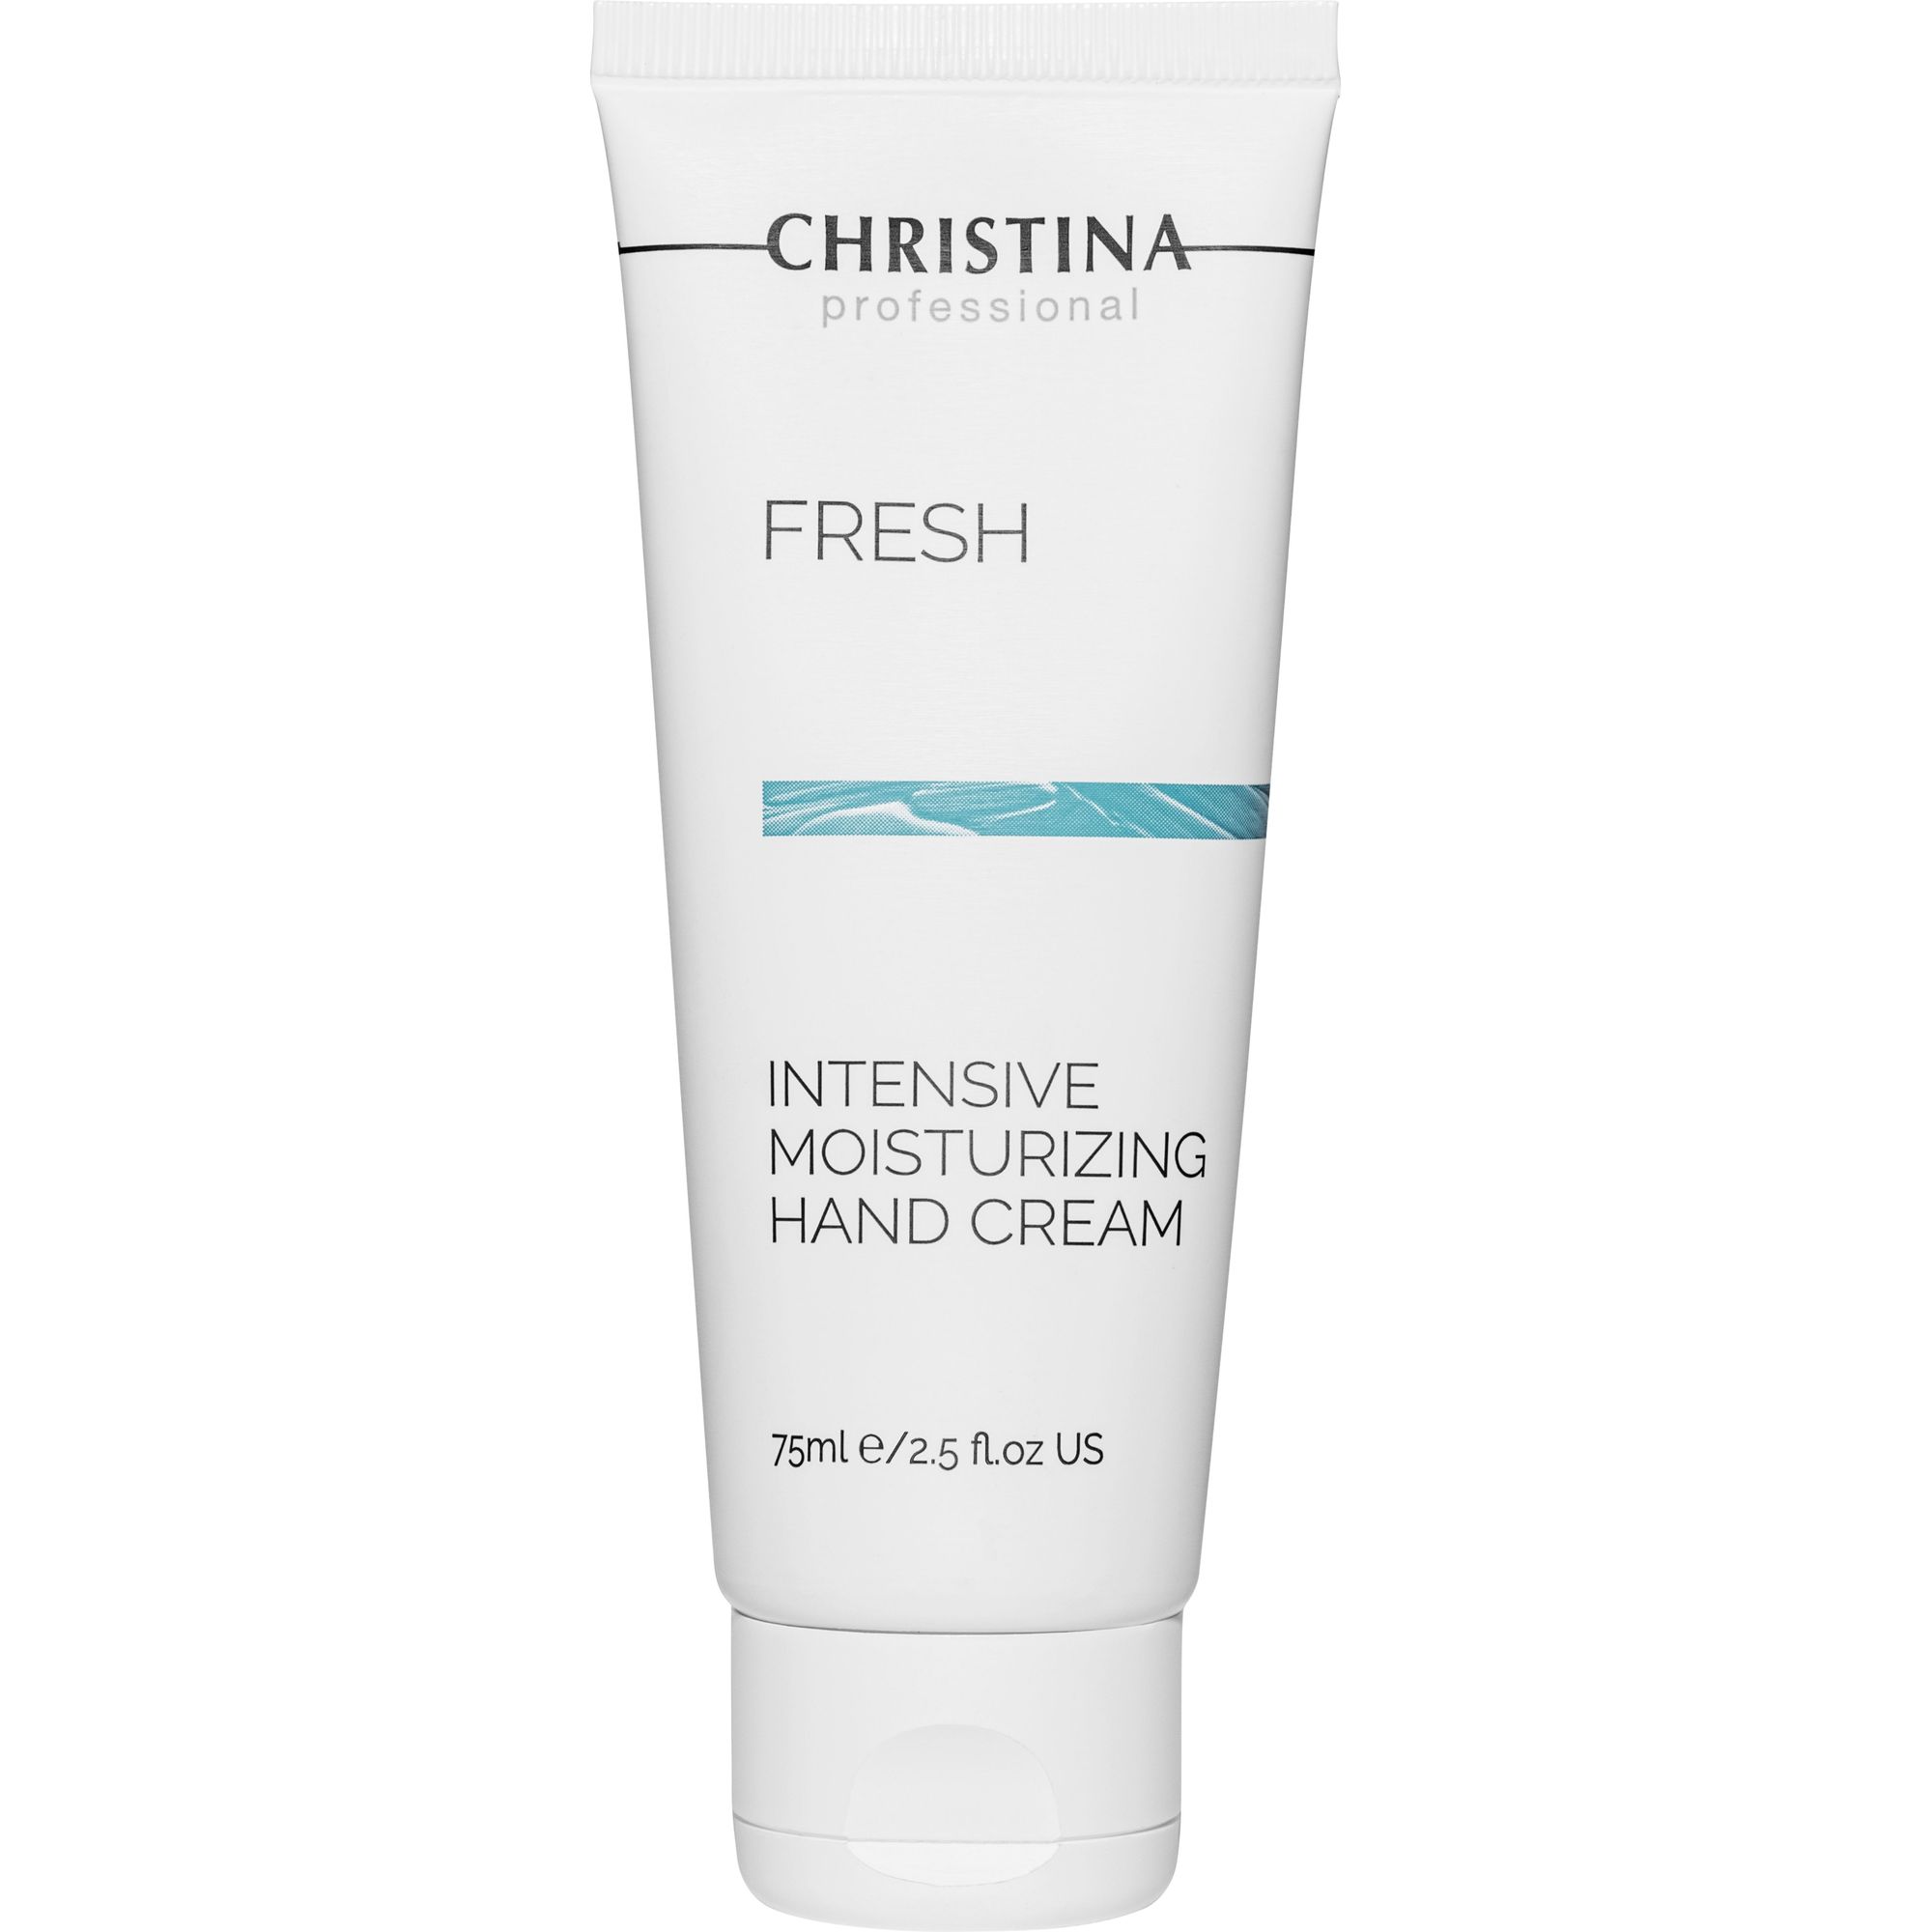 Крем для рук Christina Fresh Intensive Moisturizing Hand Cream интенсивно увлажняющий 75 мл - фото 1